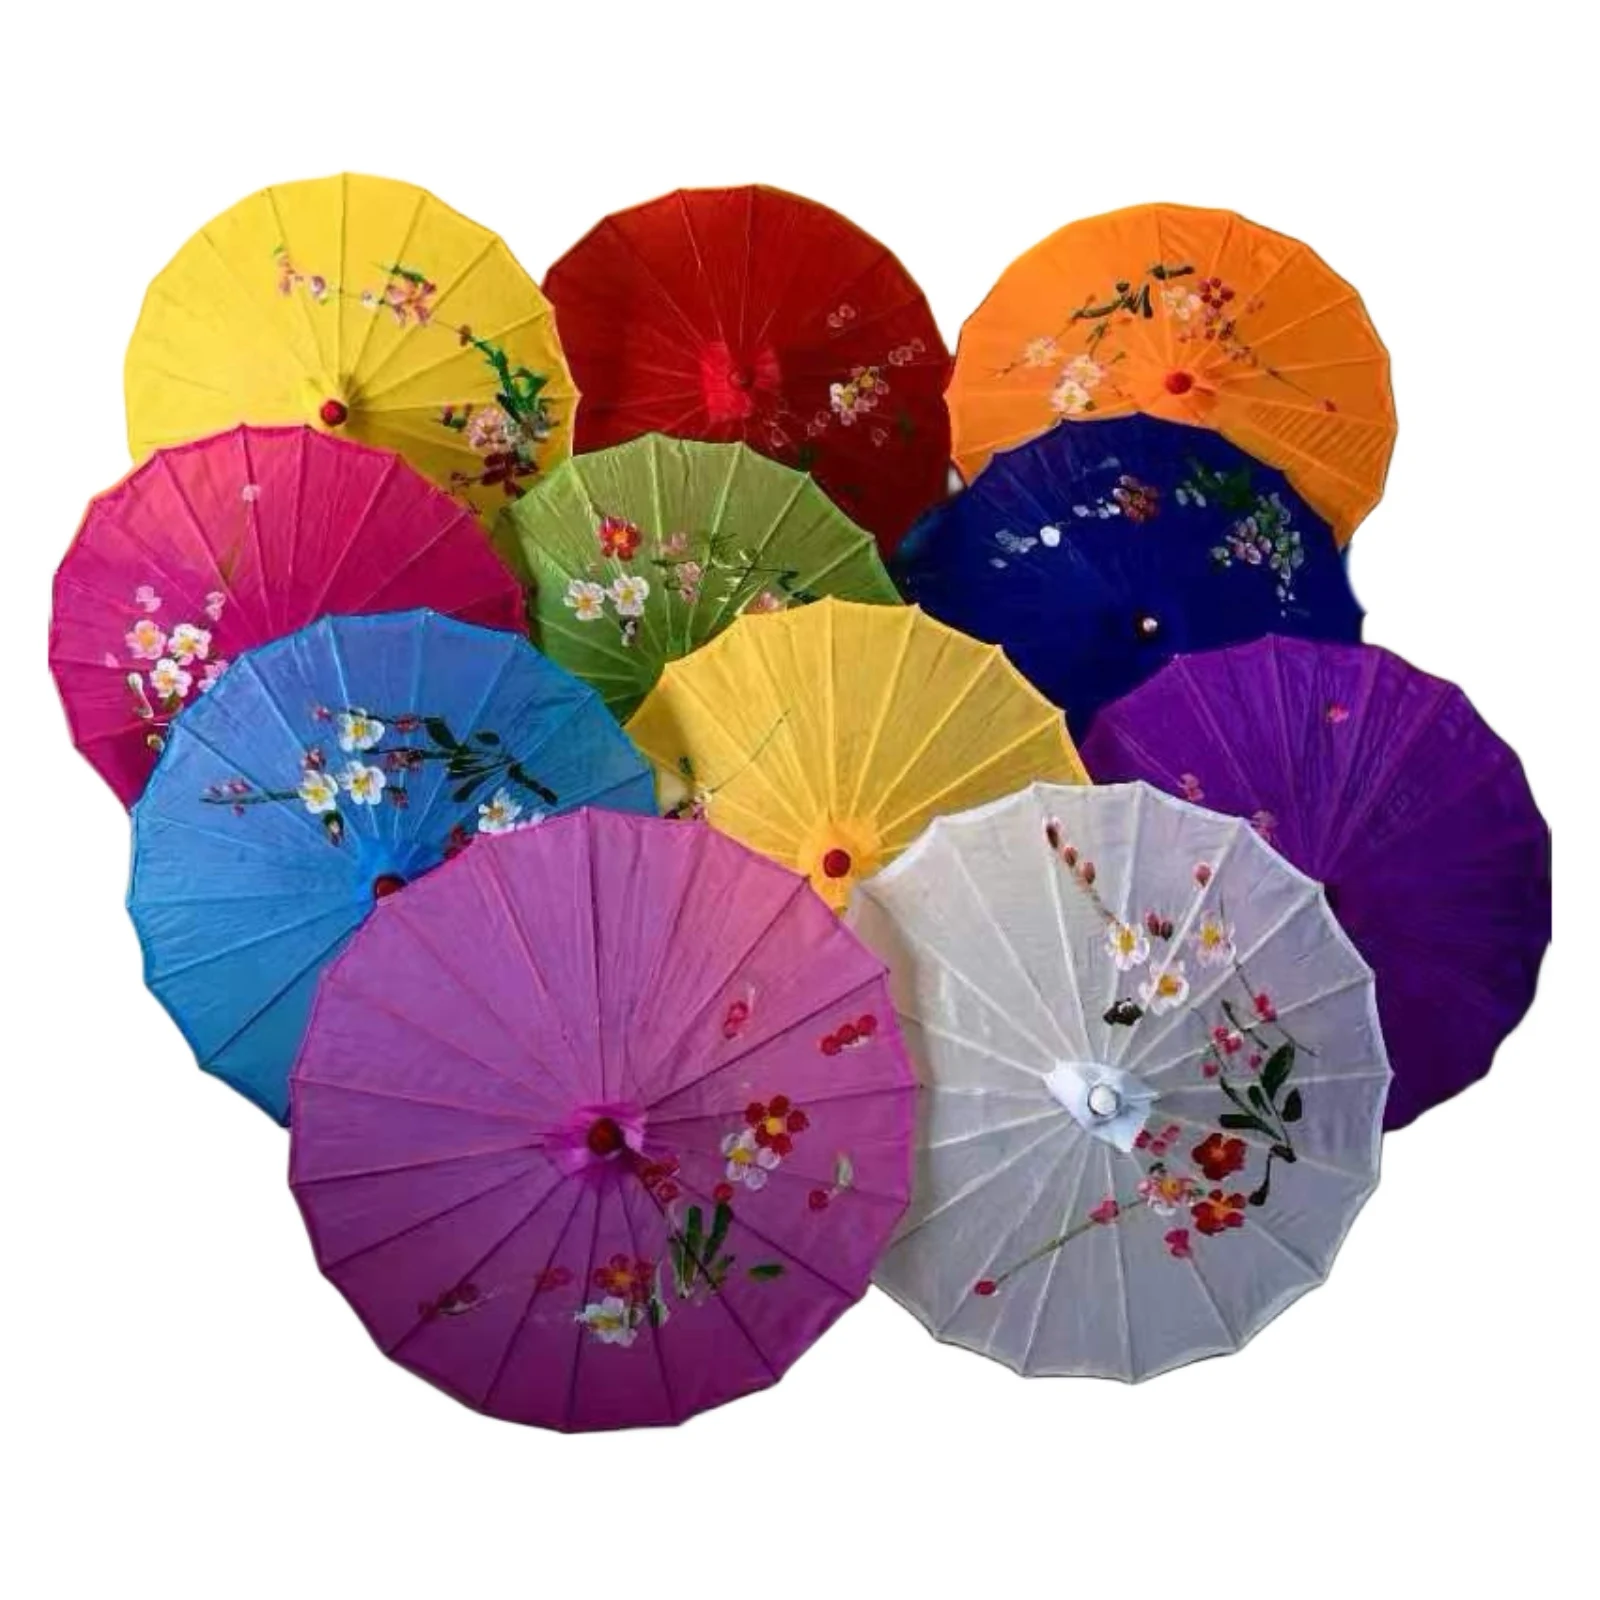 

5 pcs Diameter82cm hand-painted silk-like umbrellas Modified oil paper umbrellas Party Ceiling Decoration